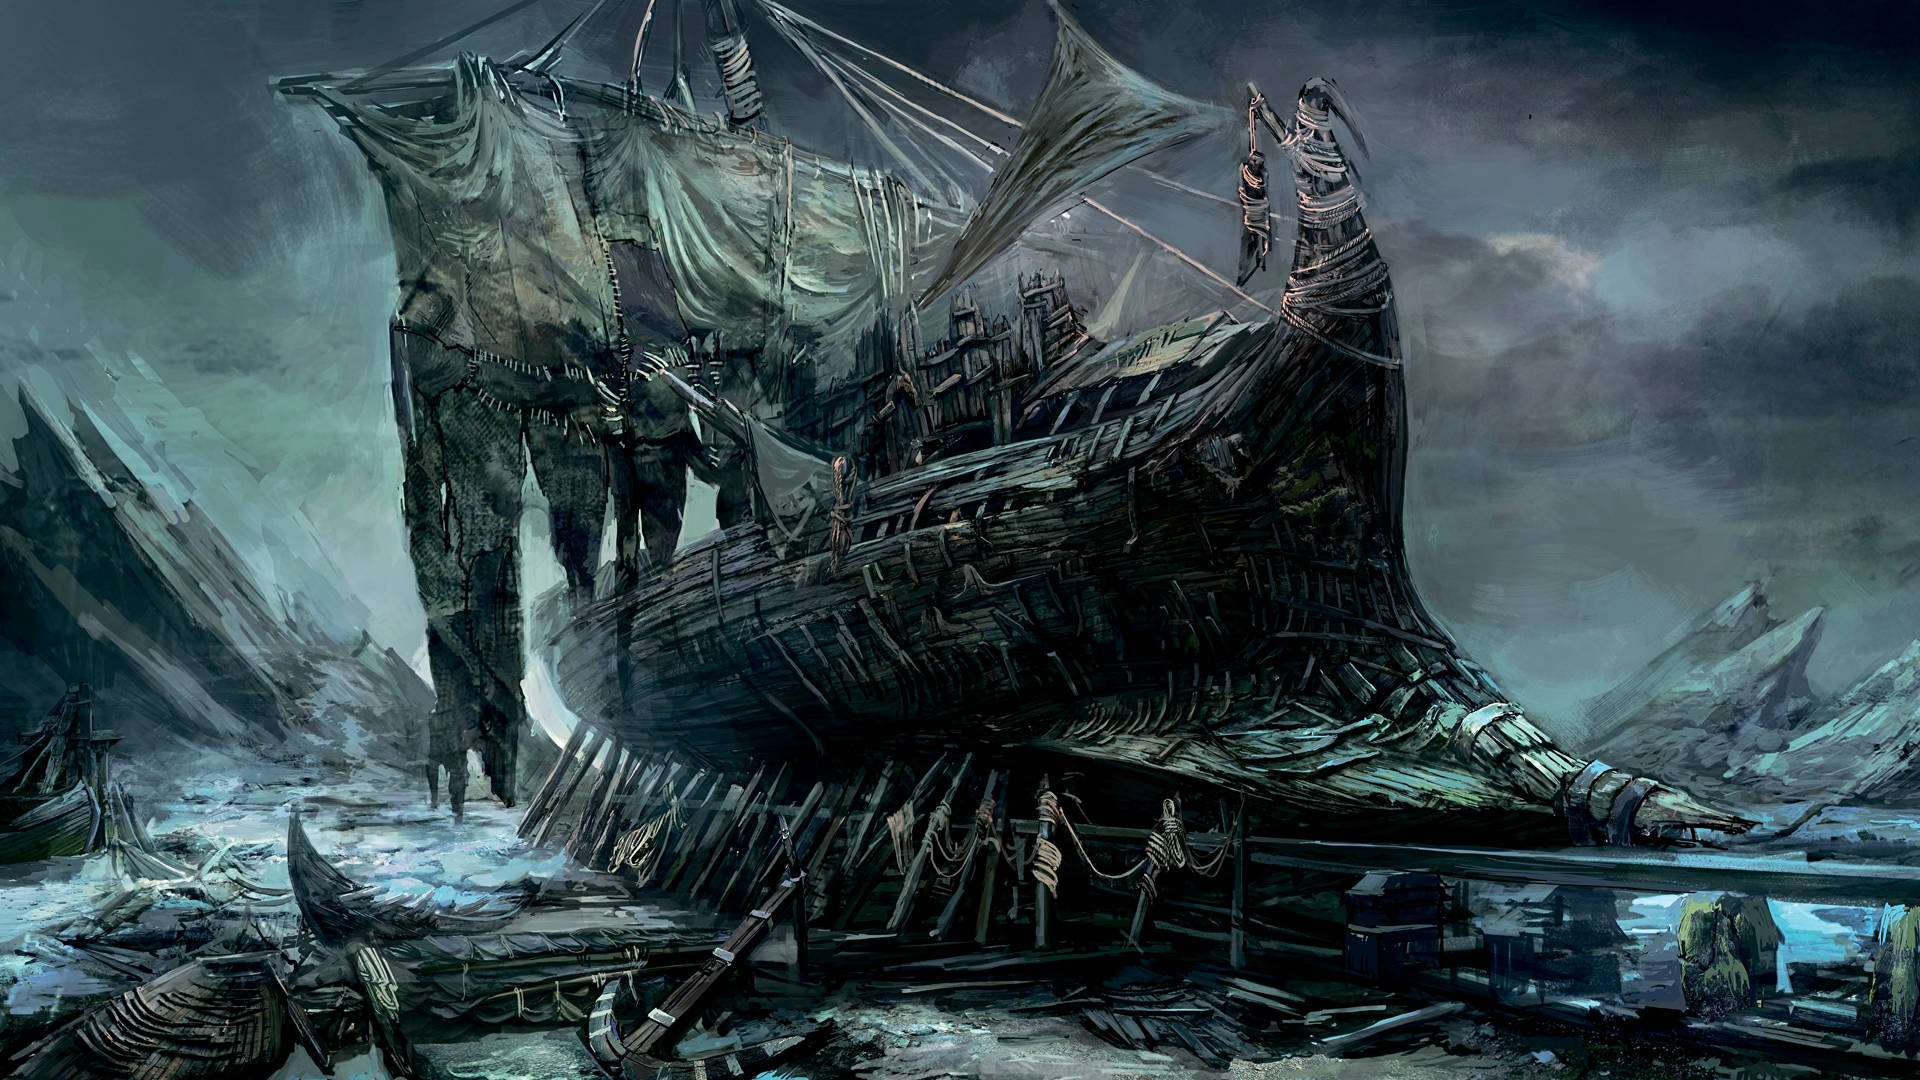 Haunted Ghost Ship Wreck Wallpaper